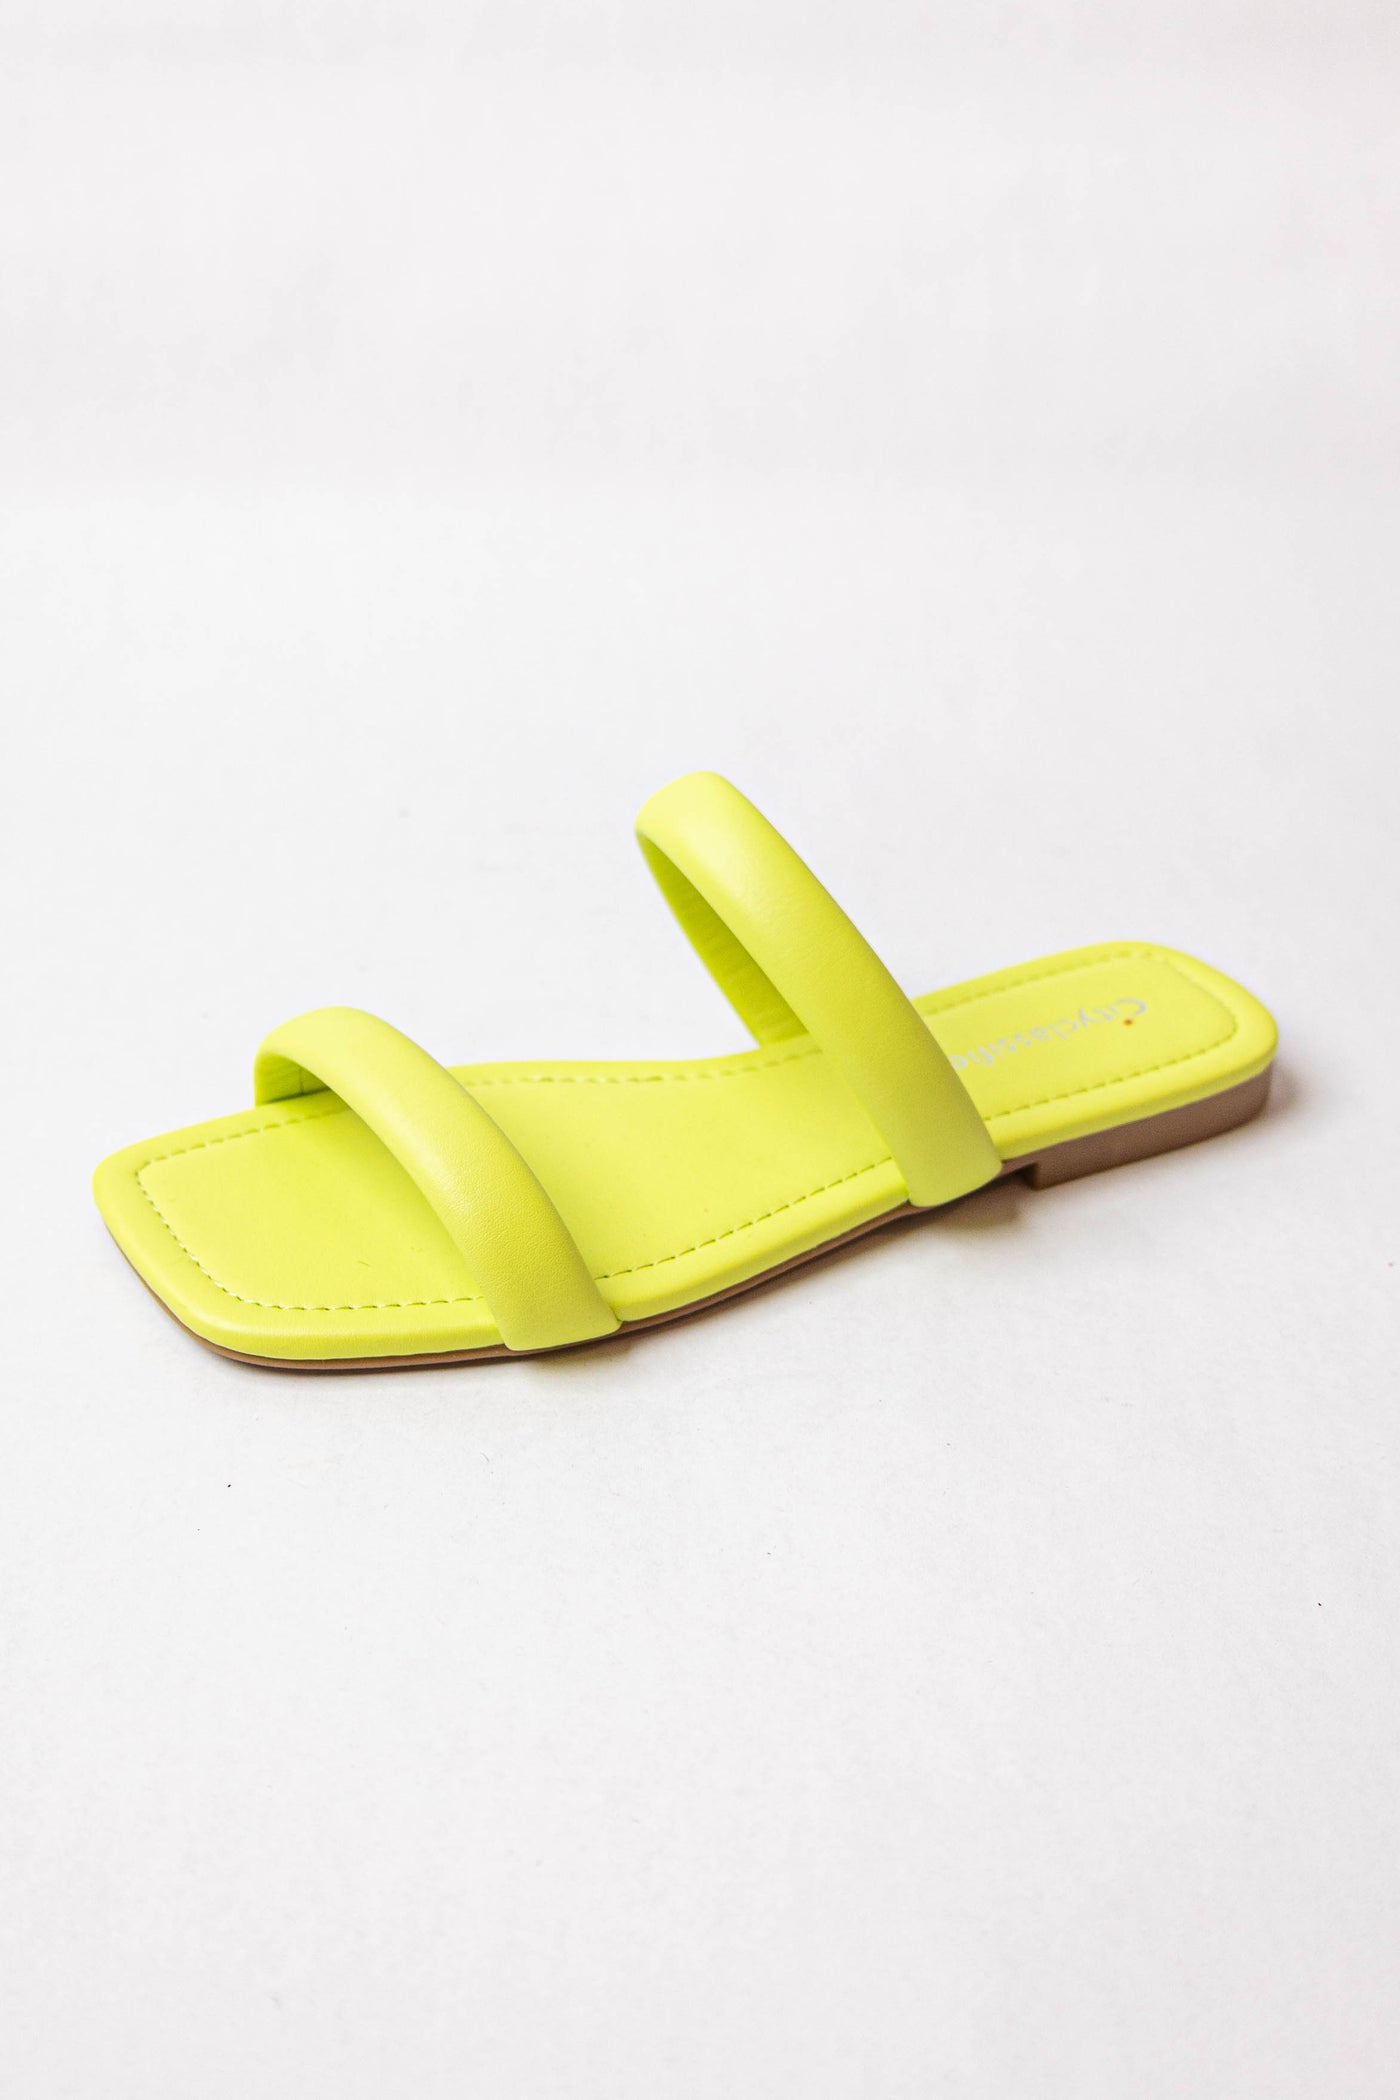 Lemon Lime Pleather Square Toe Slip On Sandals